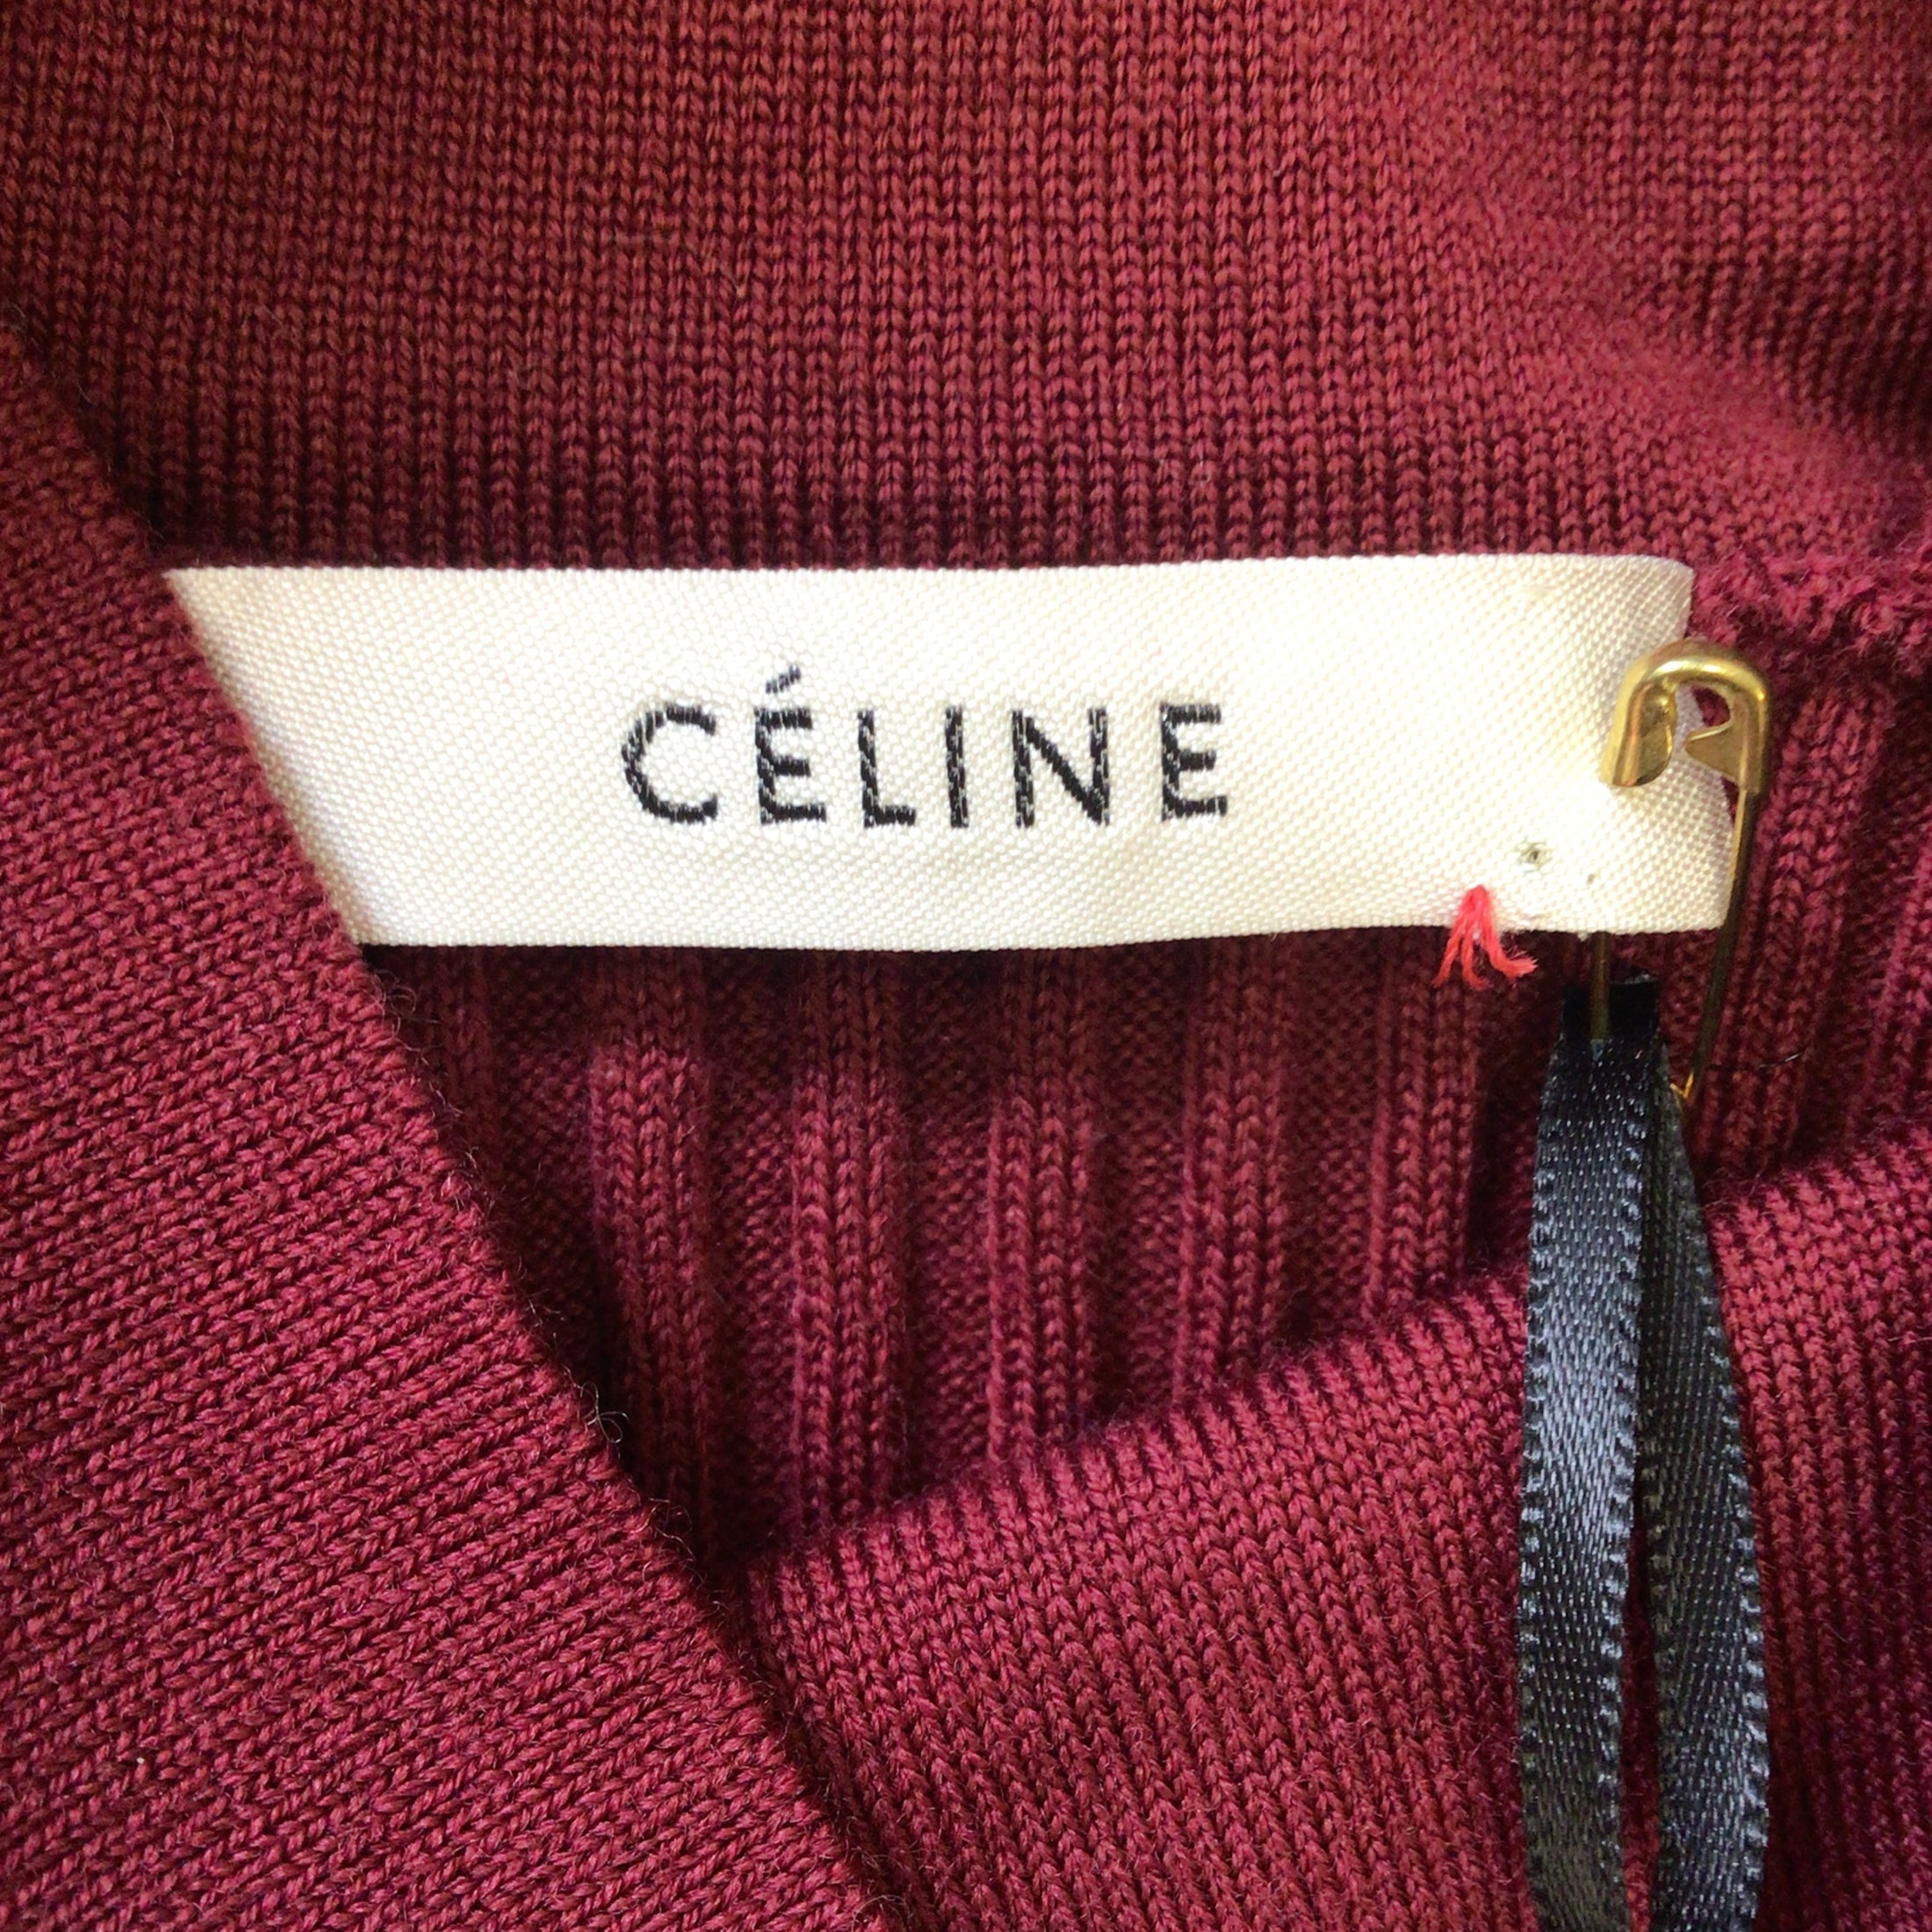 Celine Burgundy Long Sleeved Ribbed Knit Wool Sweater